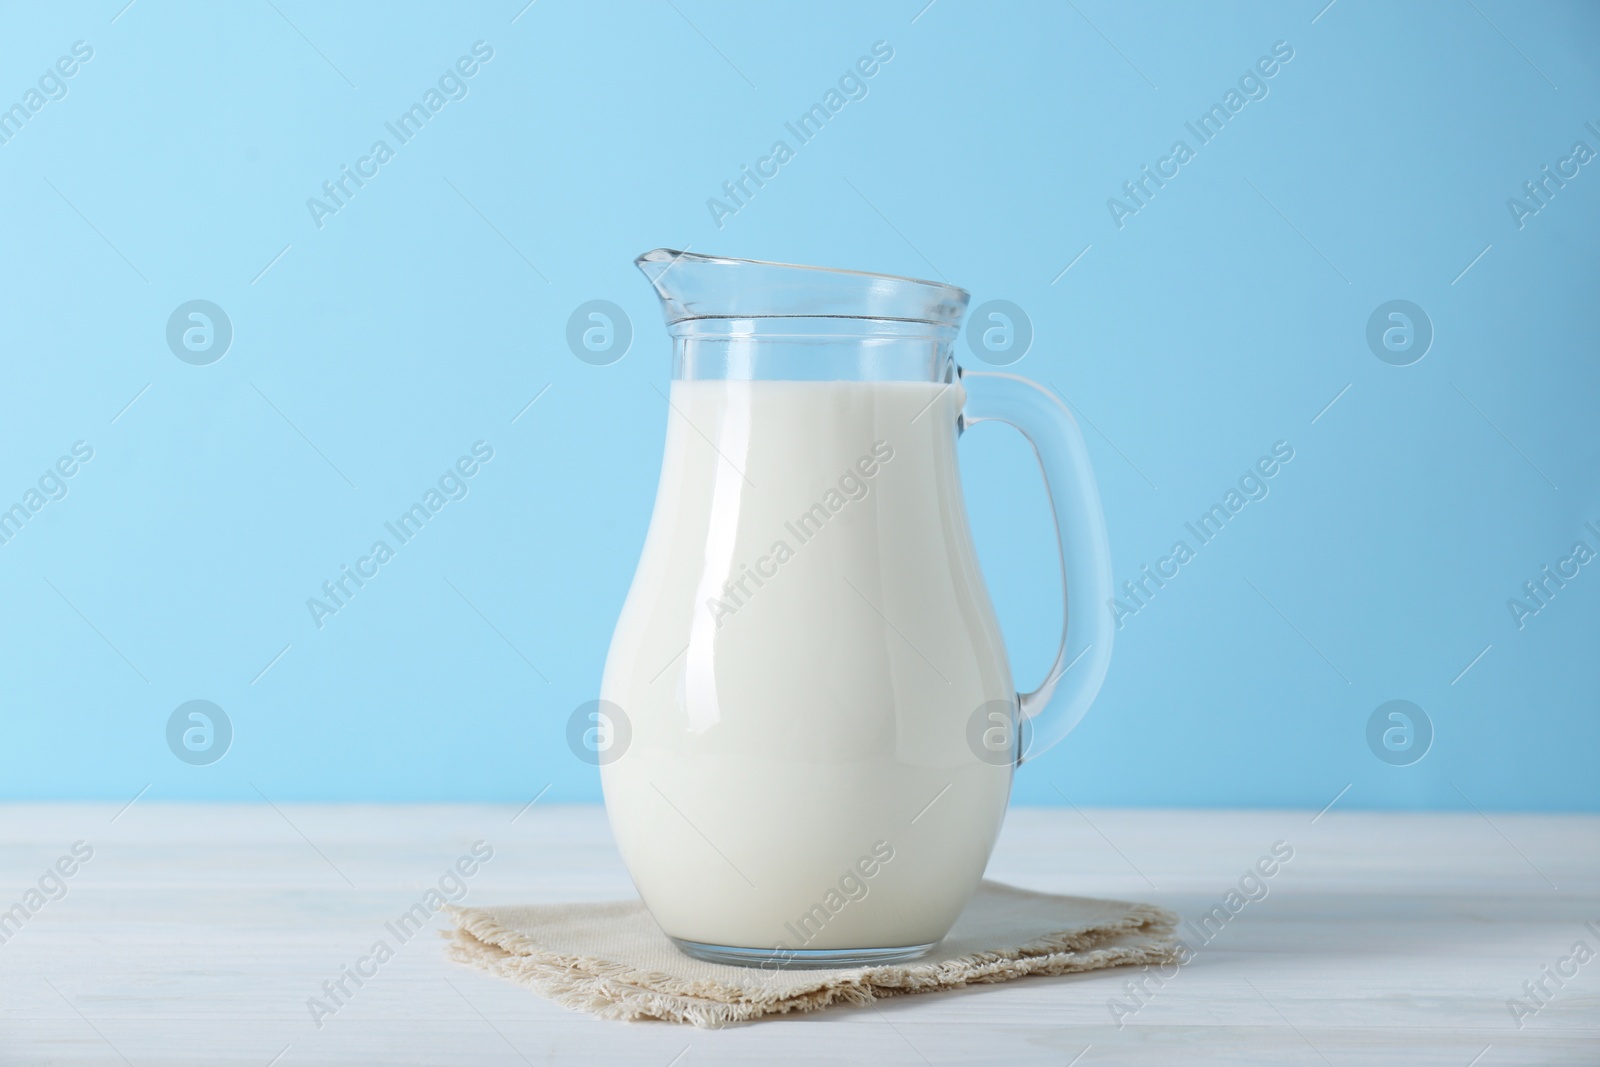 Photo of Jug of fresh milk on white wooden table against light blue background